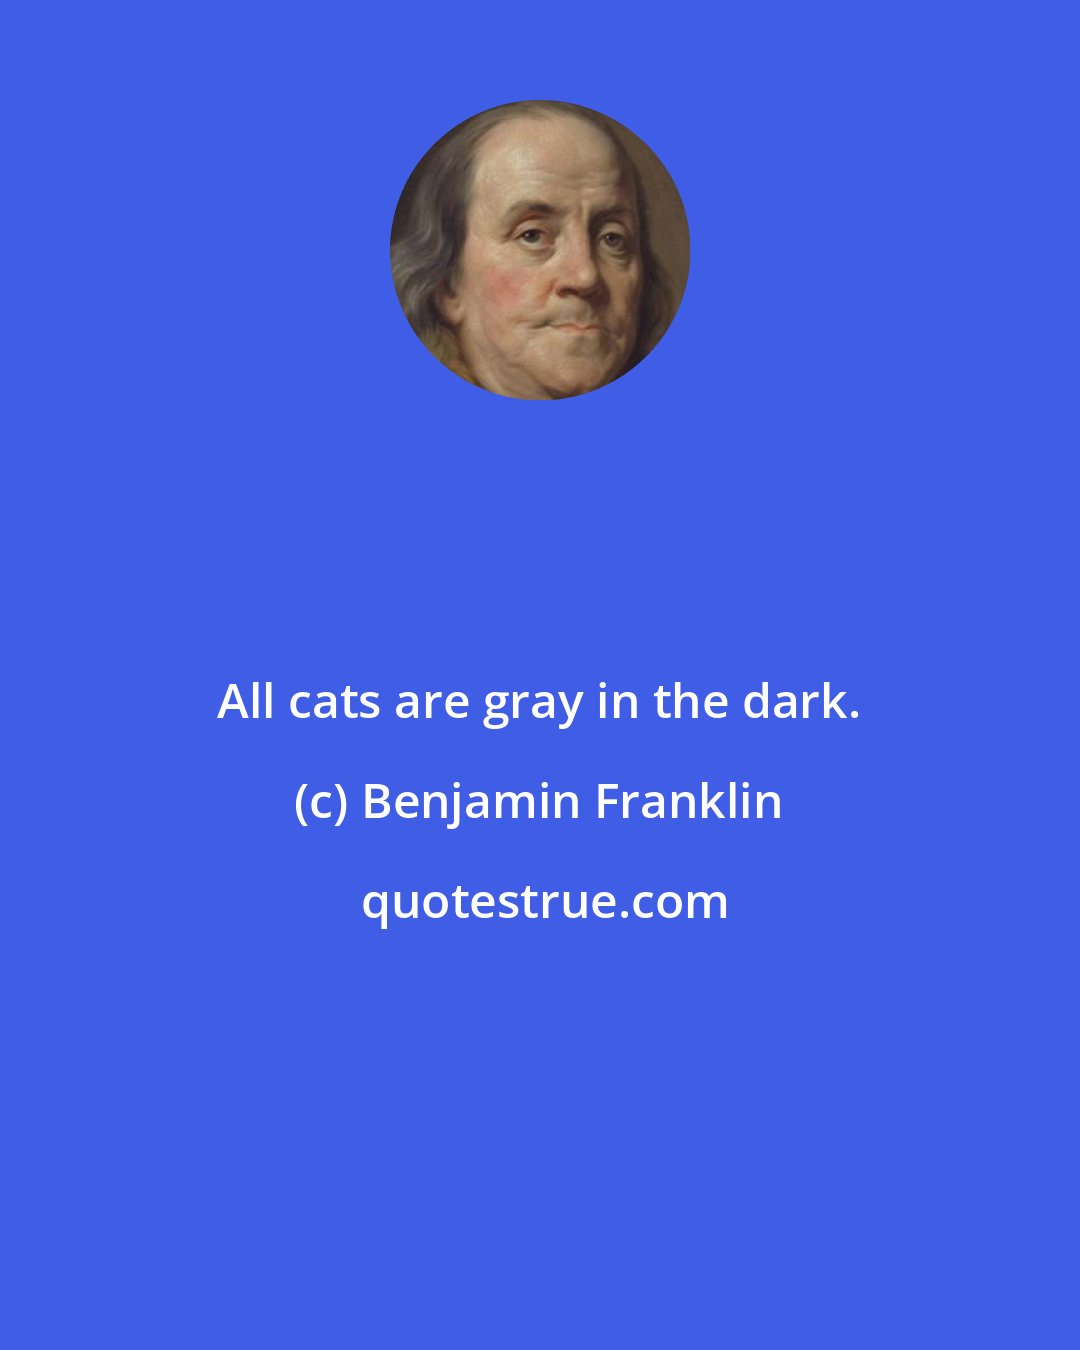 Benjamin Franklin: All cats are gray in the dark.